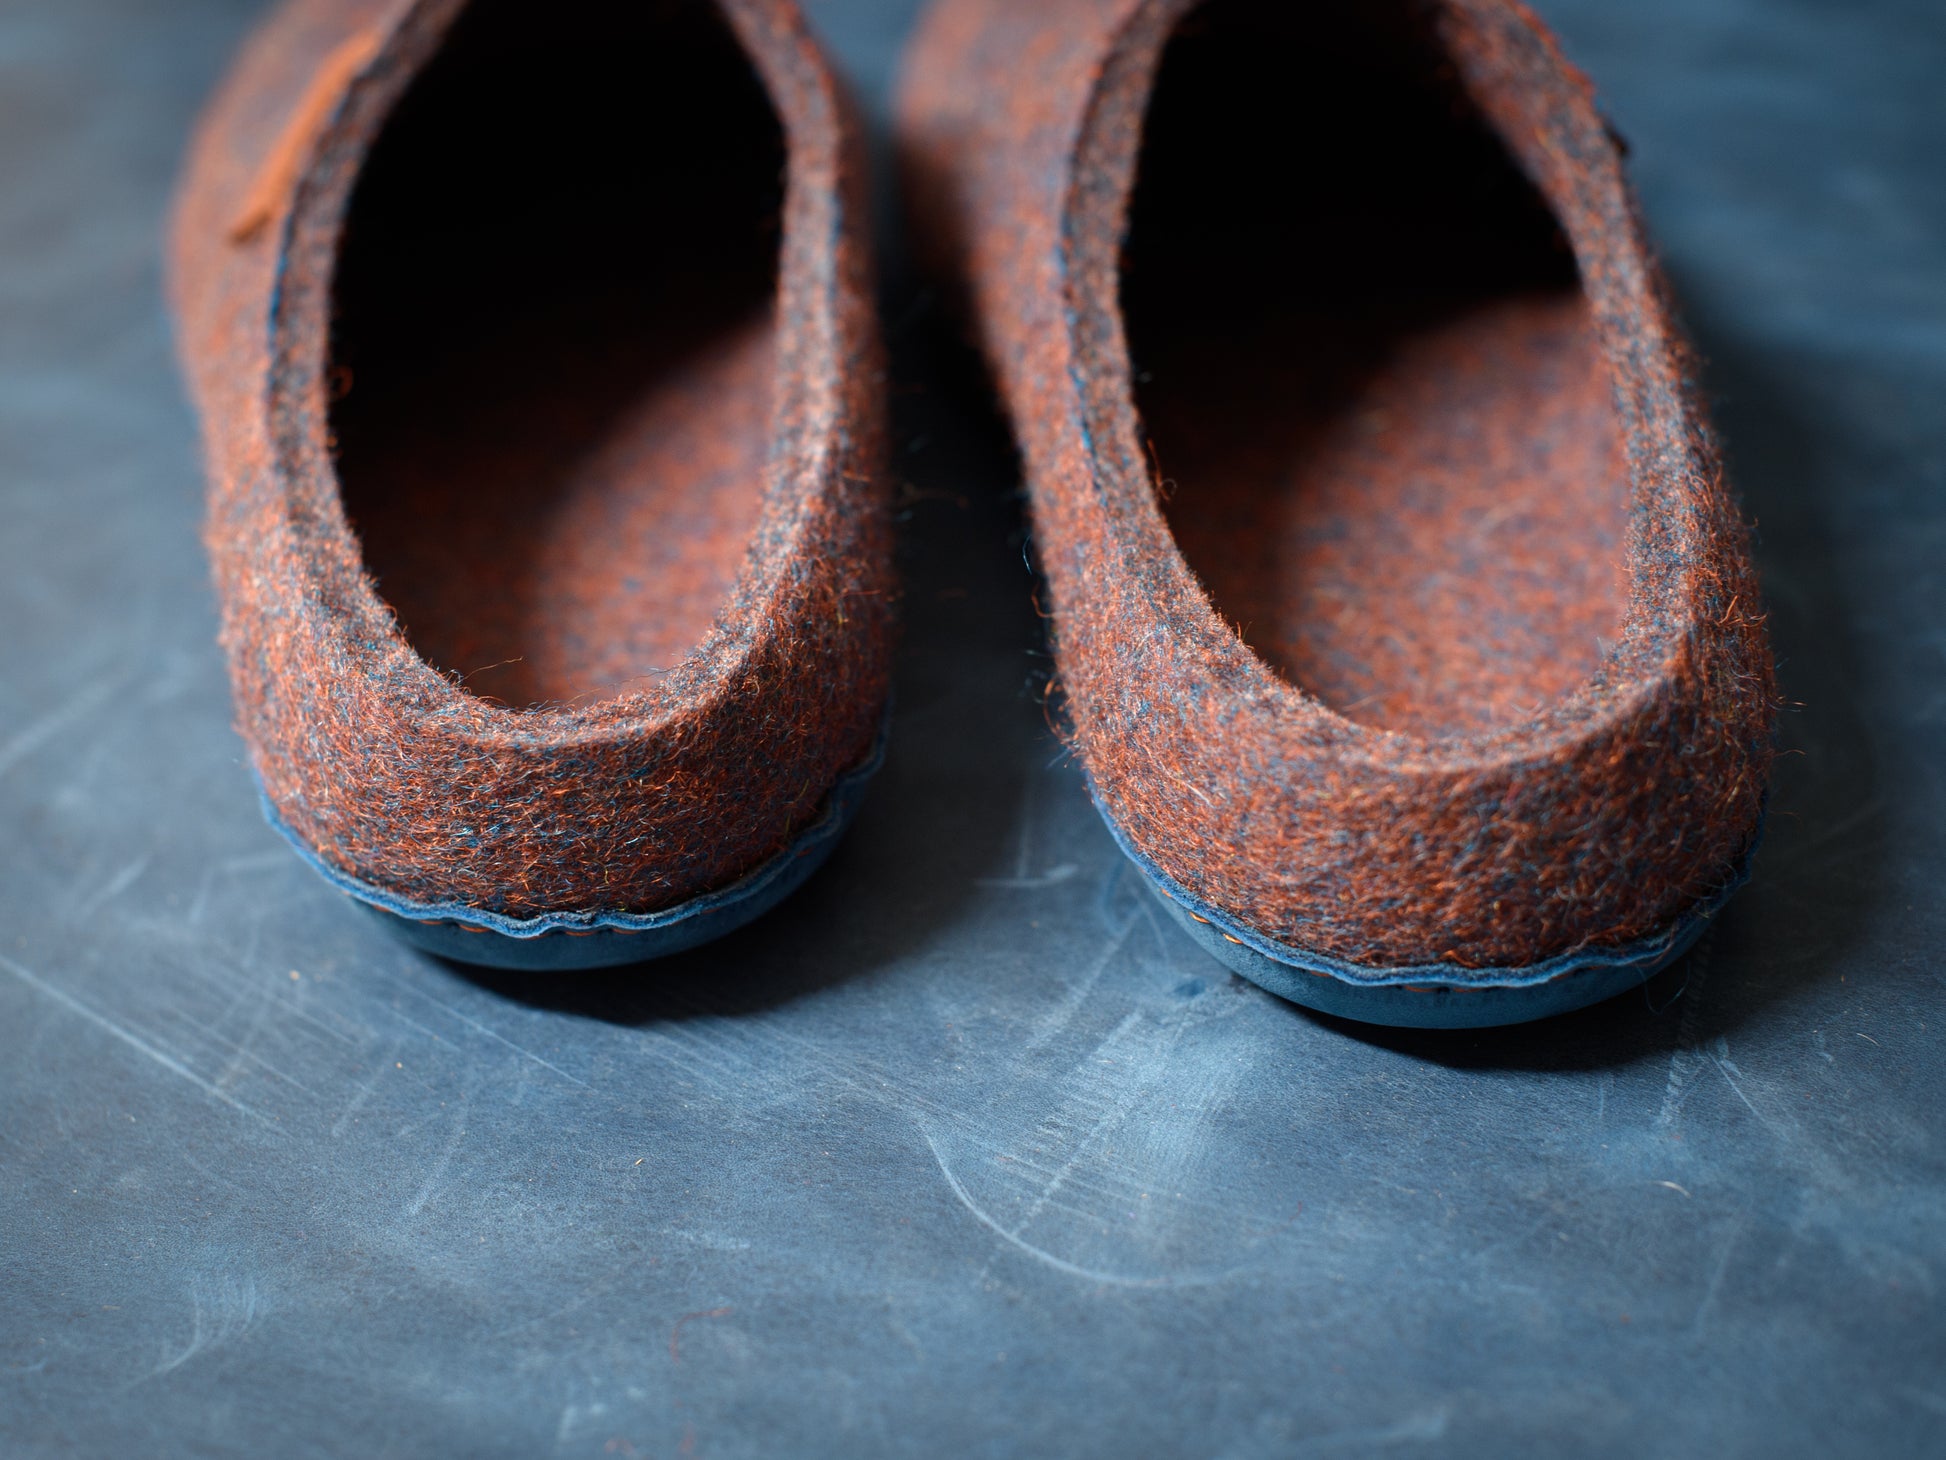 [felted_slippers],[wool_slippers], [burebure_slippers], [warm_wool_slippers], Semi-enclosed heel men's slippers - Rusted Metal, BureBure shoes and slippers